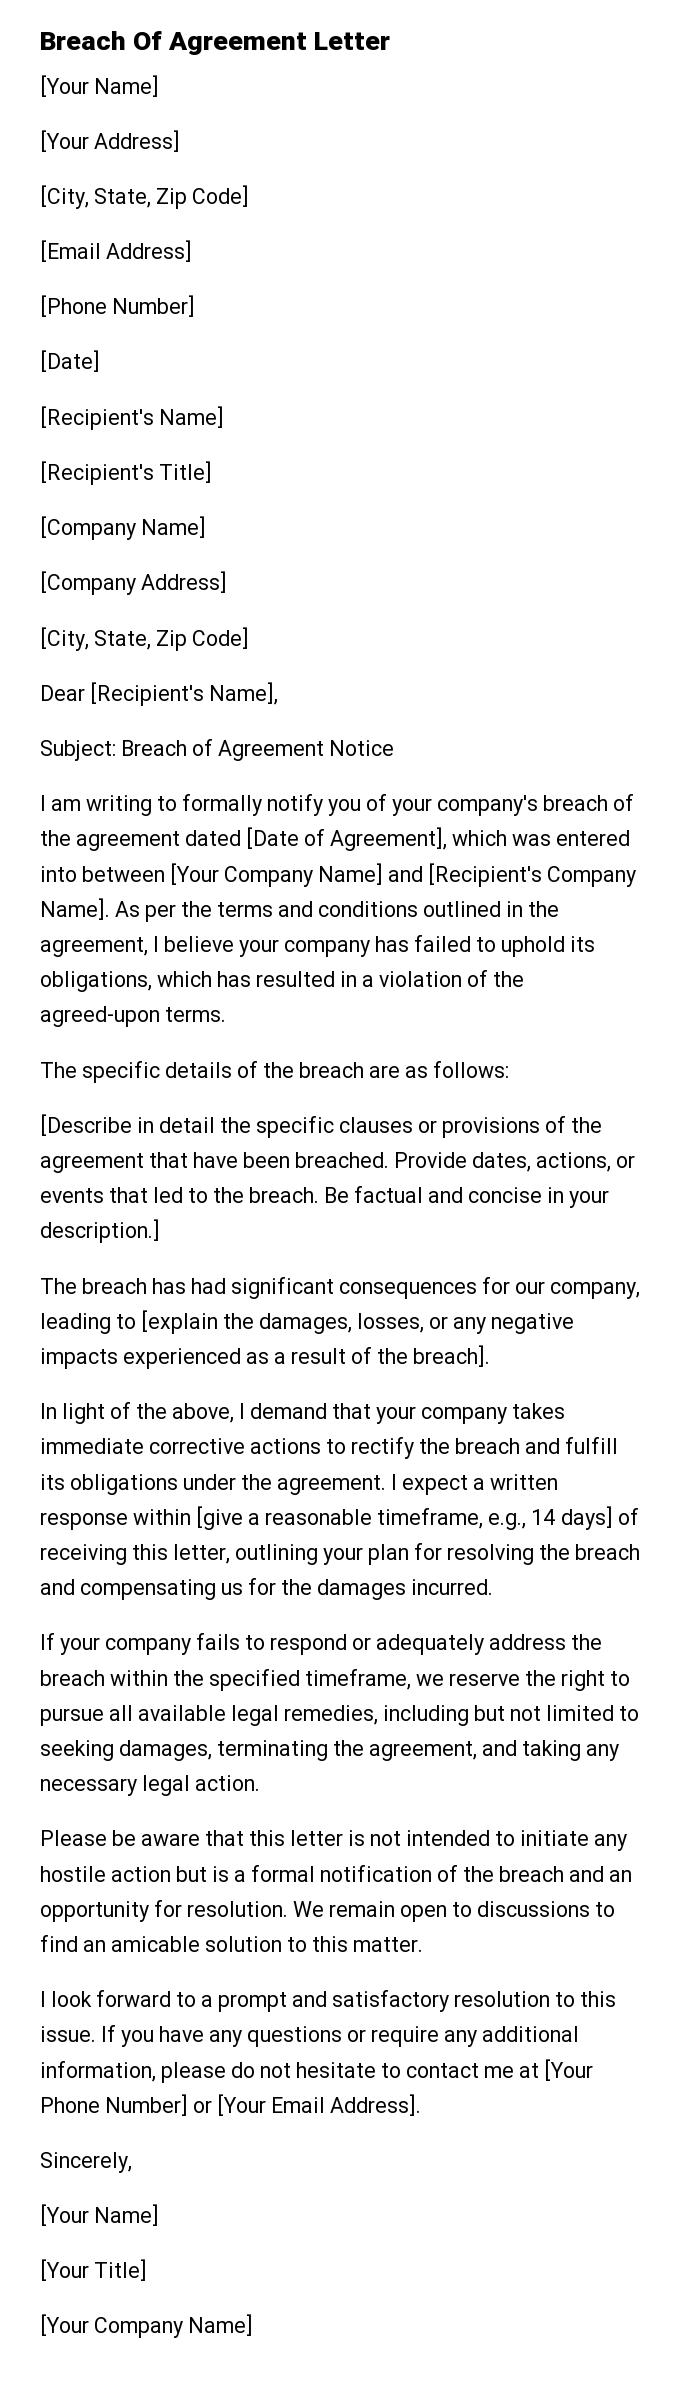 Breach Of Agreement Letter